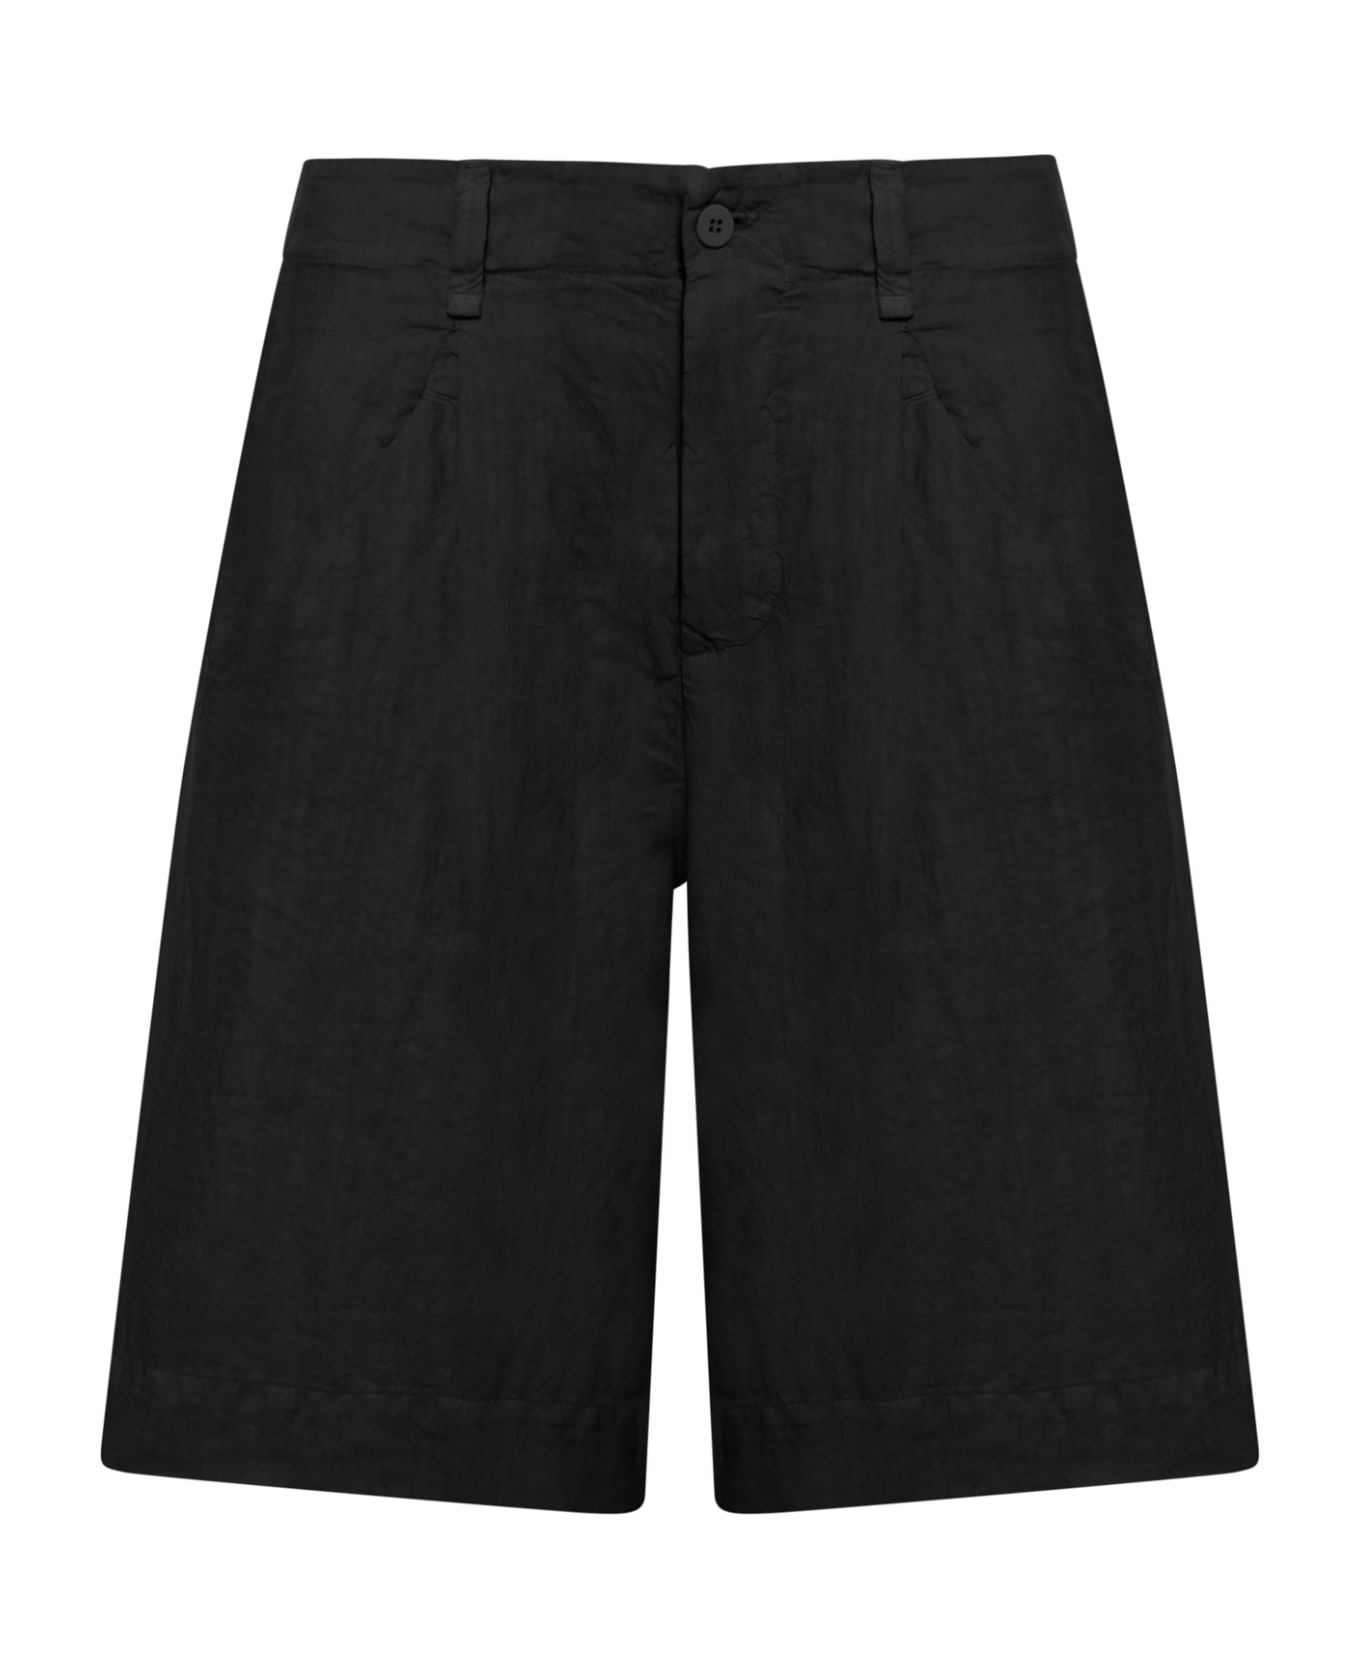 Transit Shorts - Black